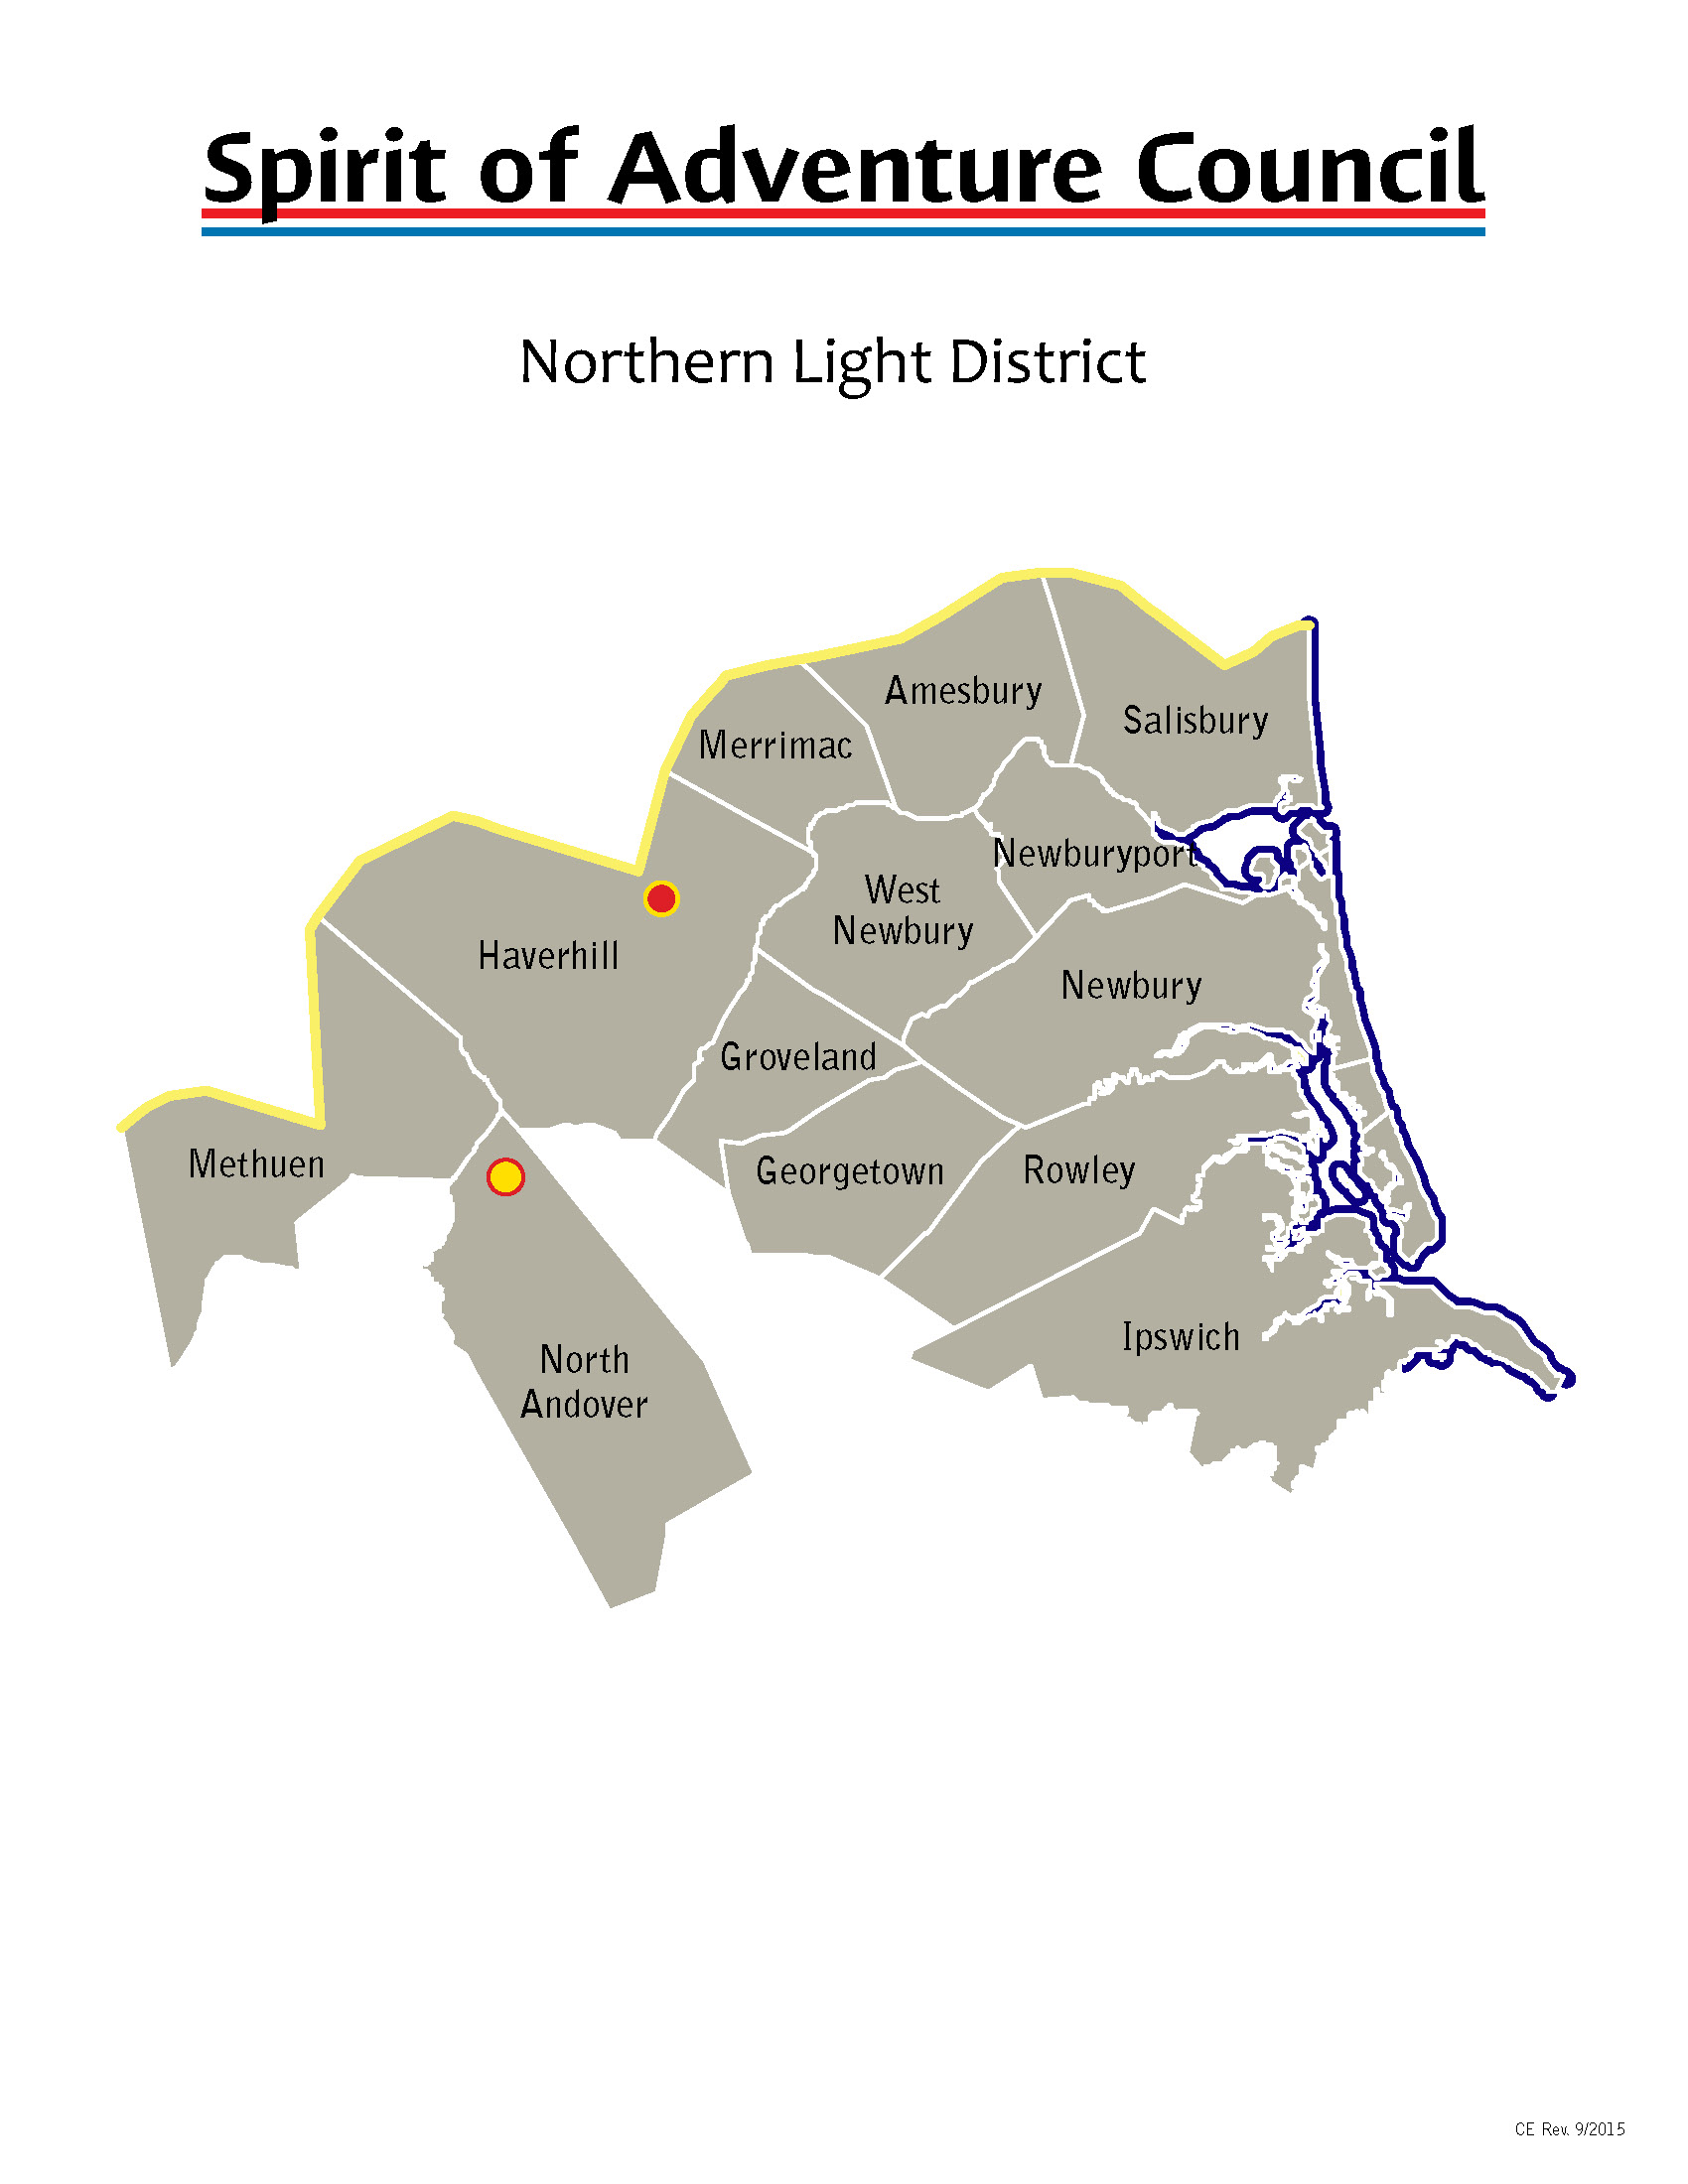 Northern Light District